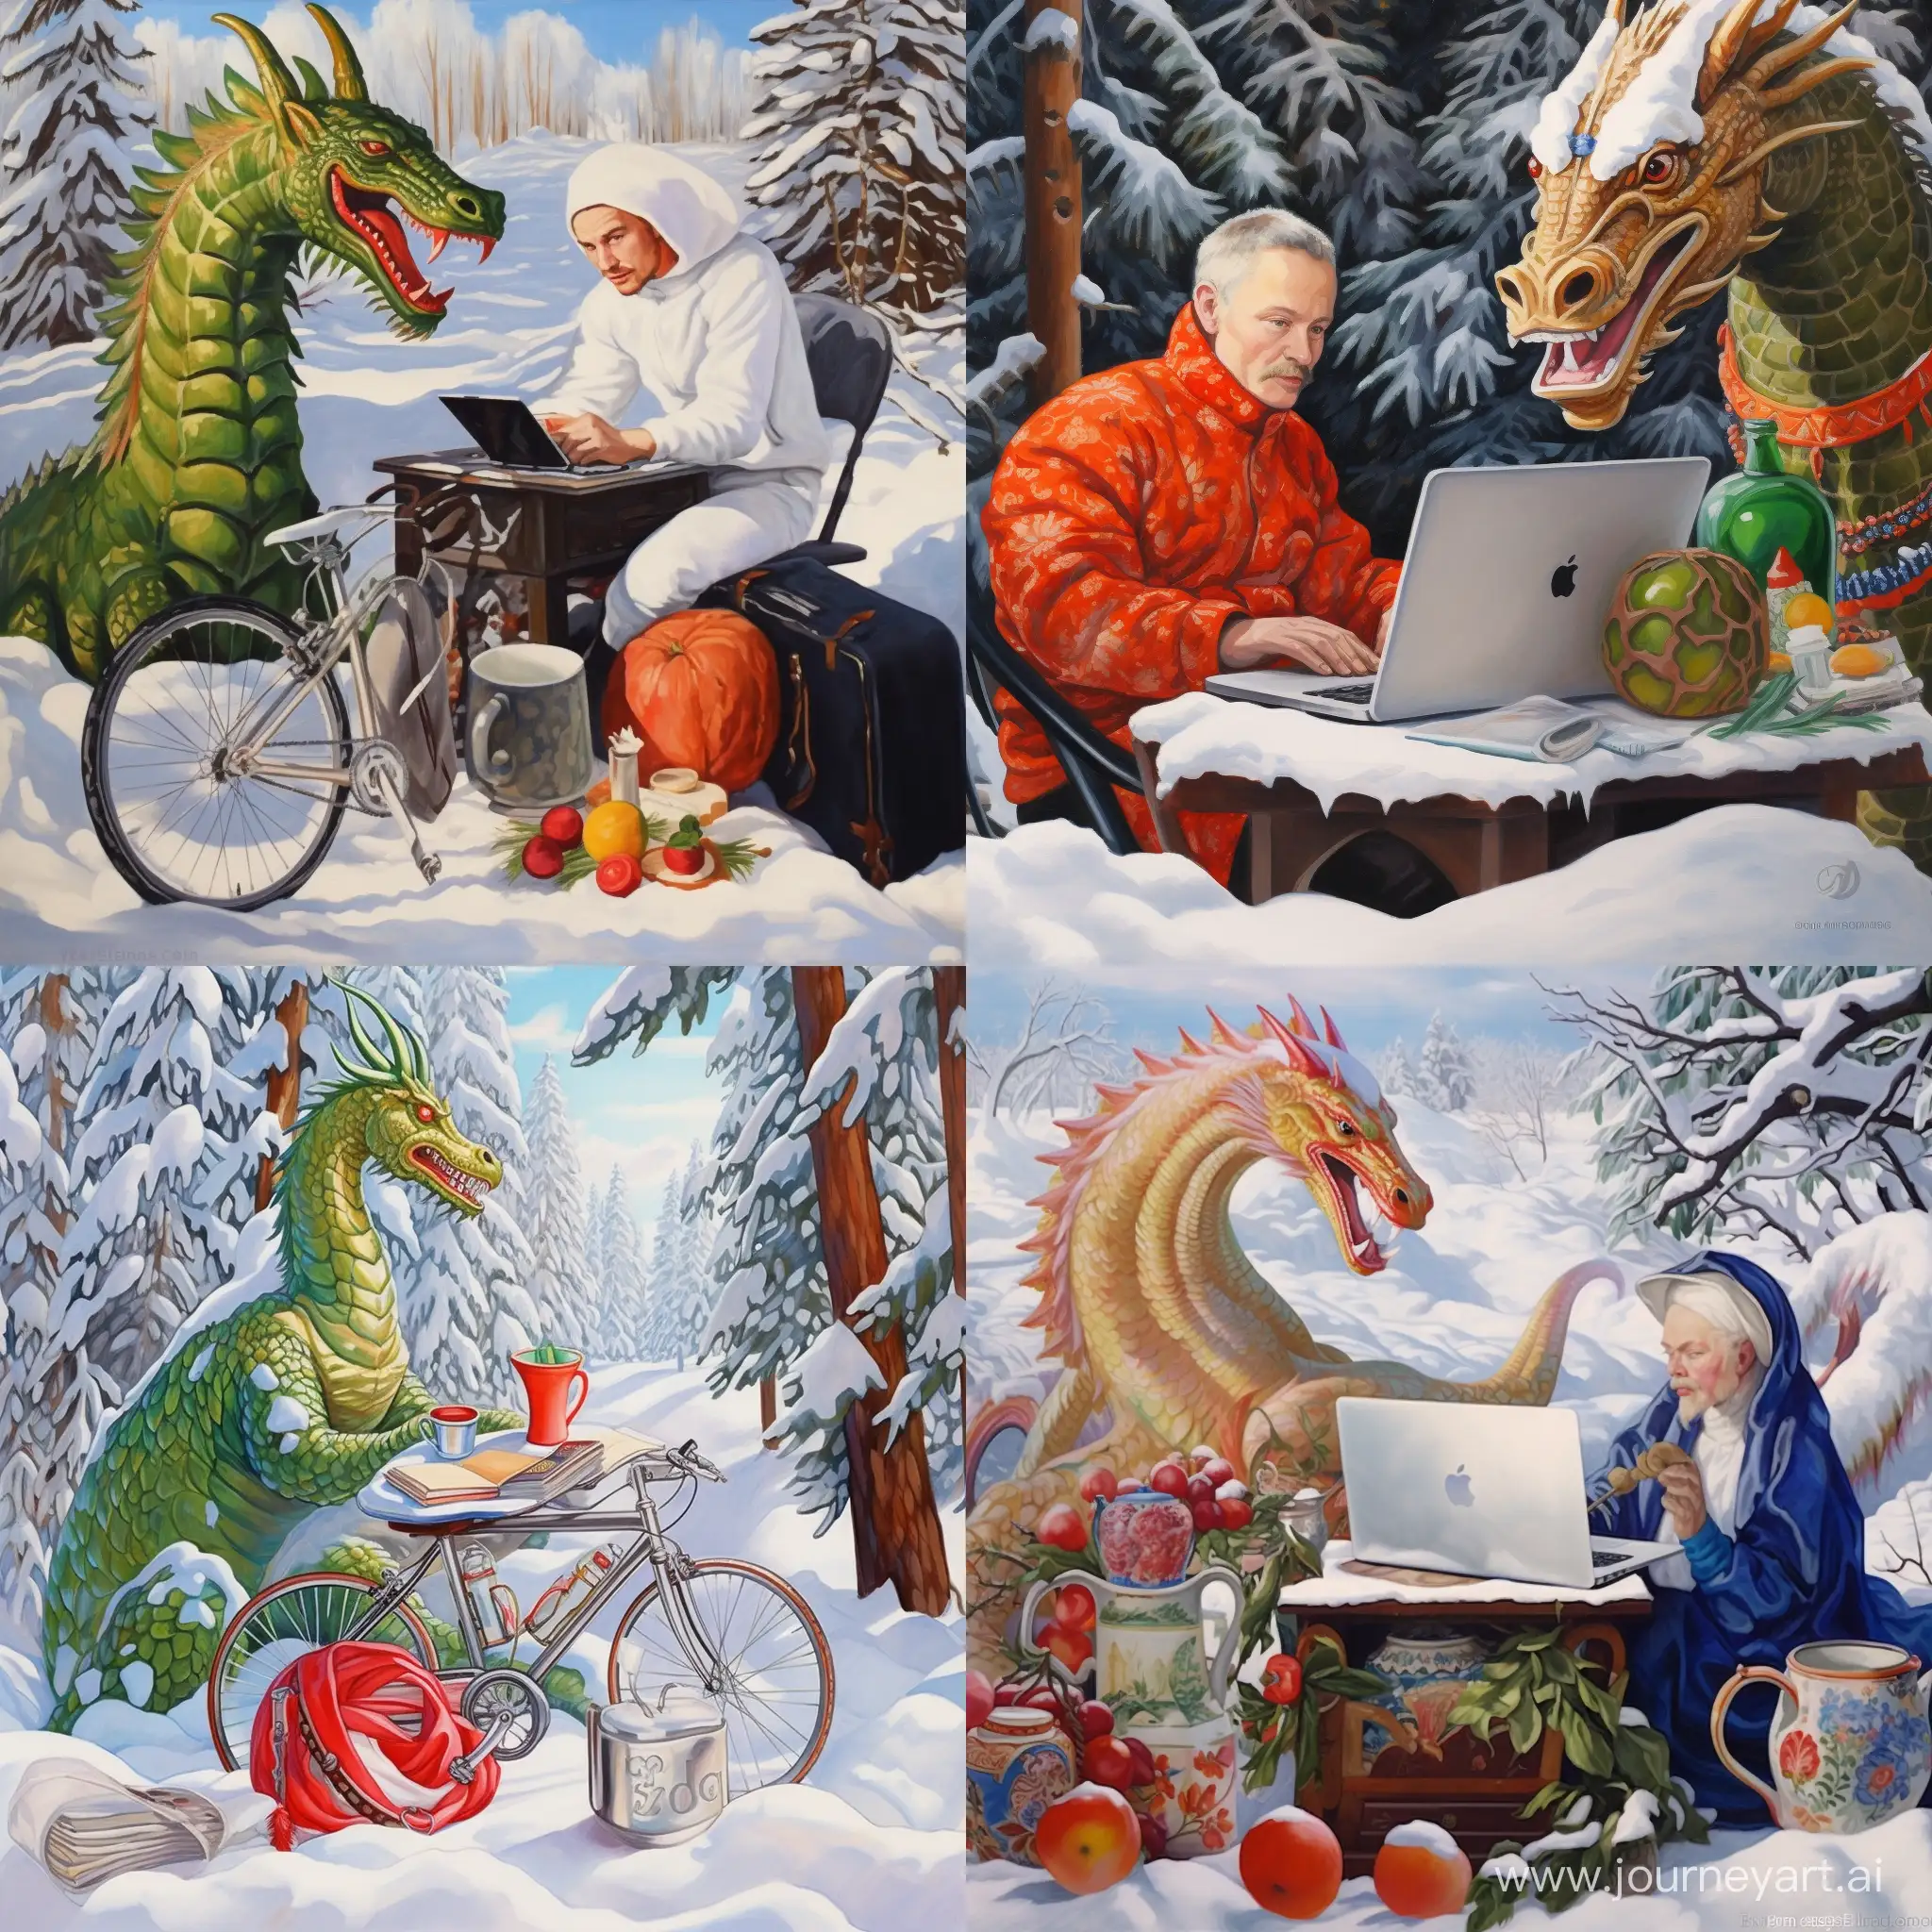 Festive-New-Year-Scene-Green-Dragon-Amidst-Snowy-Fir-Trees-with-Tambov-Emblem-on-Silver-Laptop